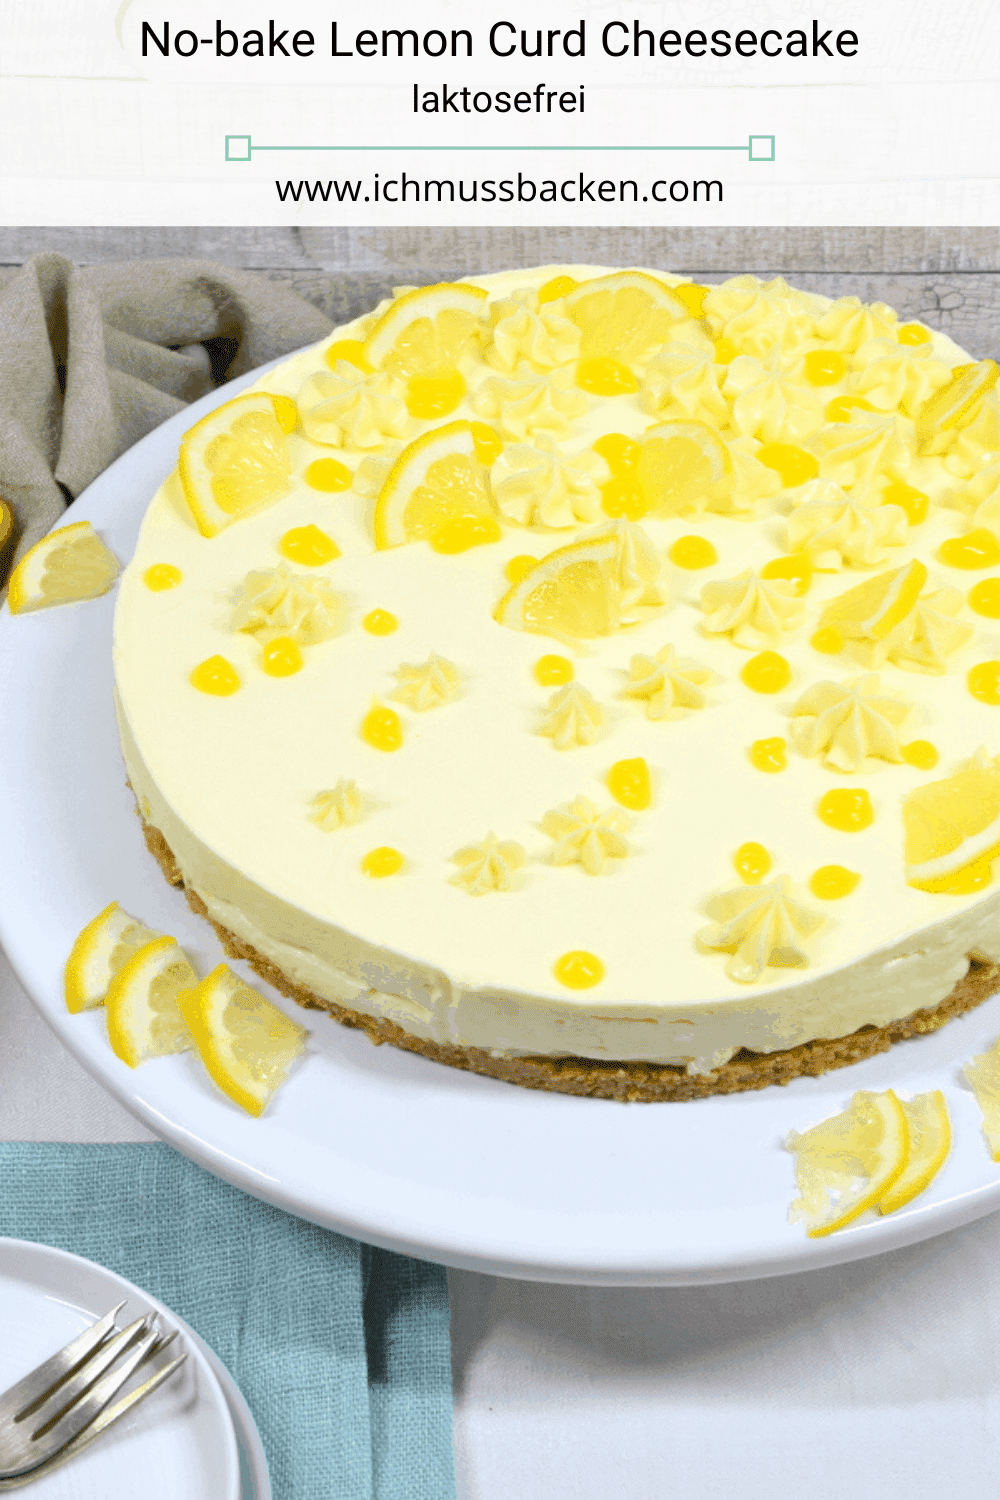 No-bake Lemon Curd Cheesecake